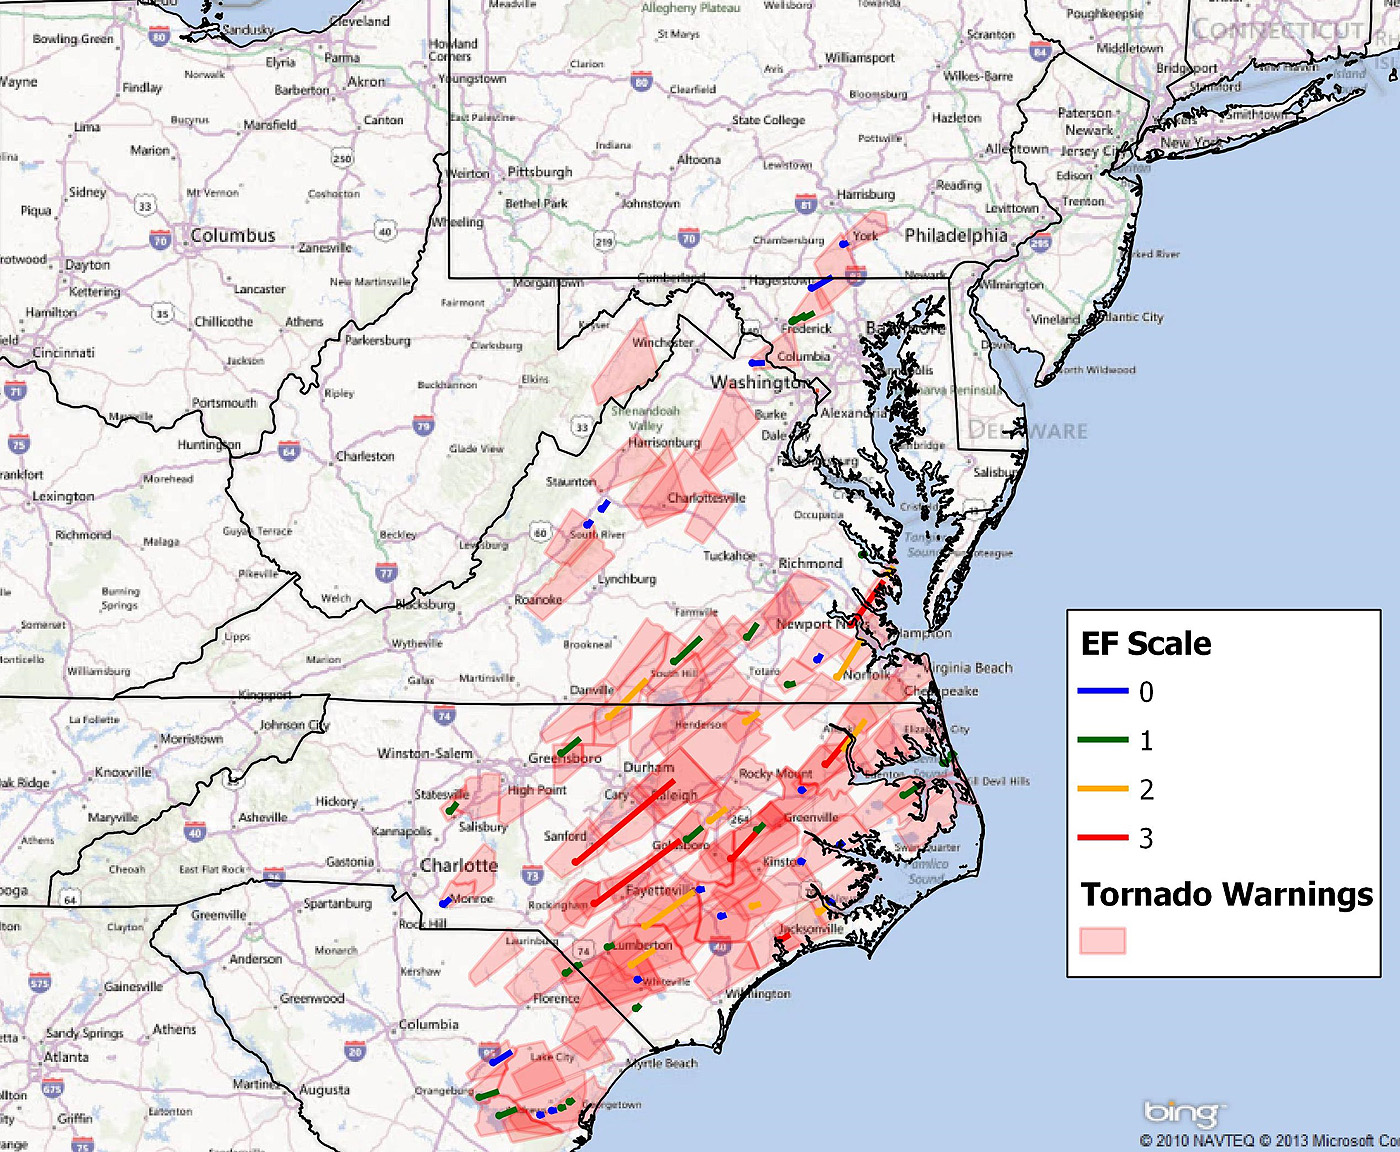 North Carolina's largest tornado outbreak - April 16, 2011 - U.S. Tornadoes1400 x 1152